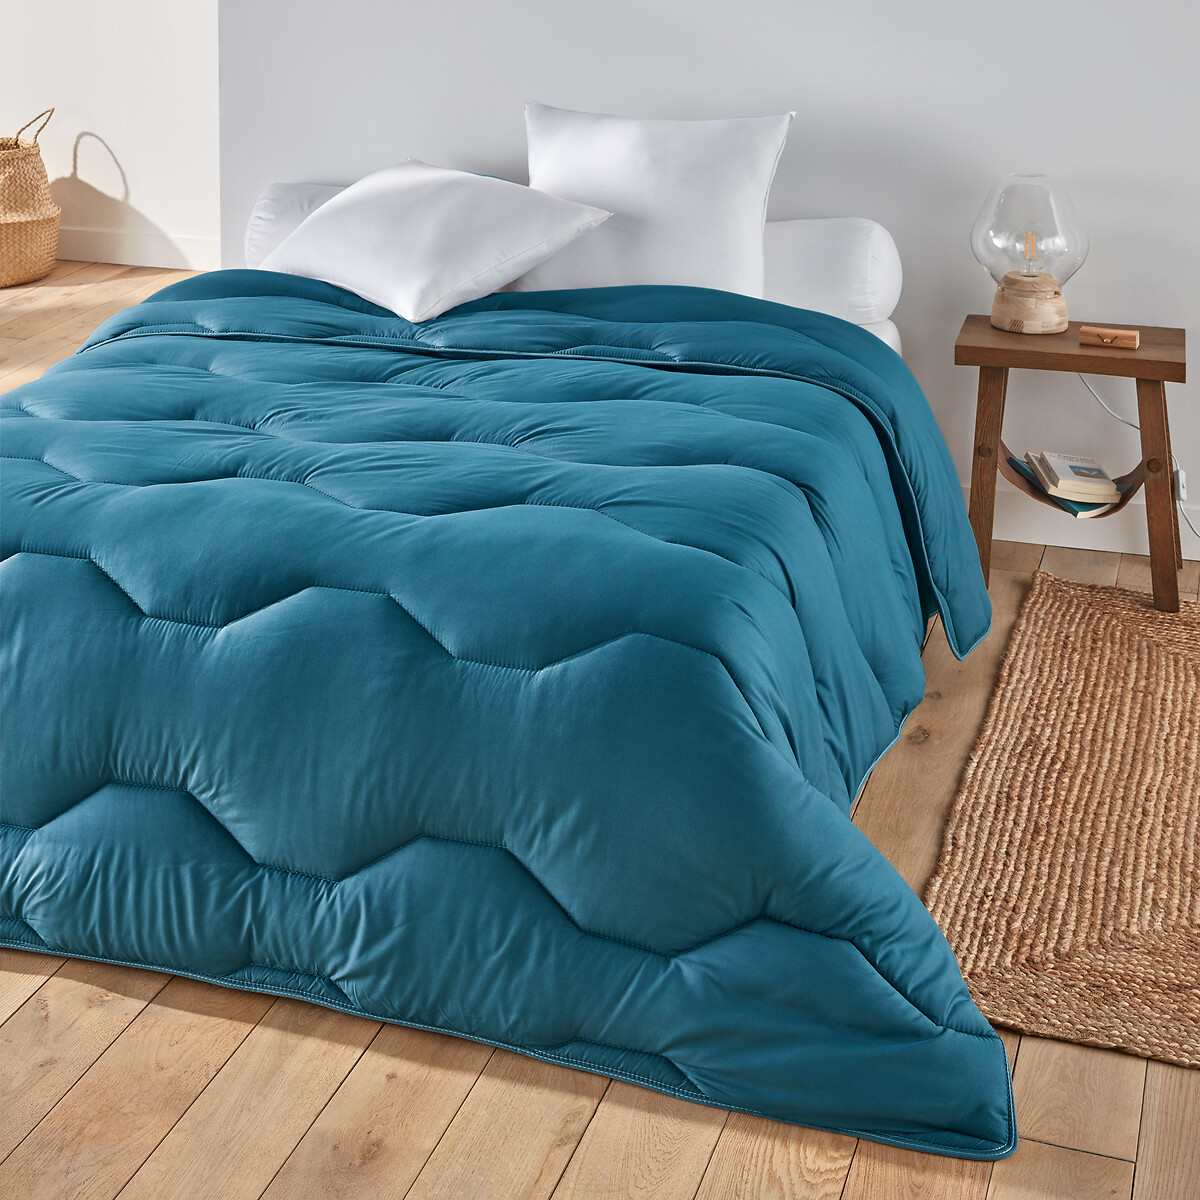 Одеяло 100 полиэстер качество стандарт 300 гм 200 x 200 см синий